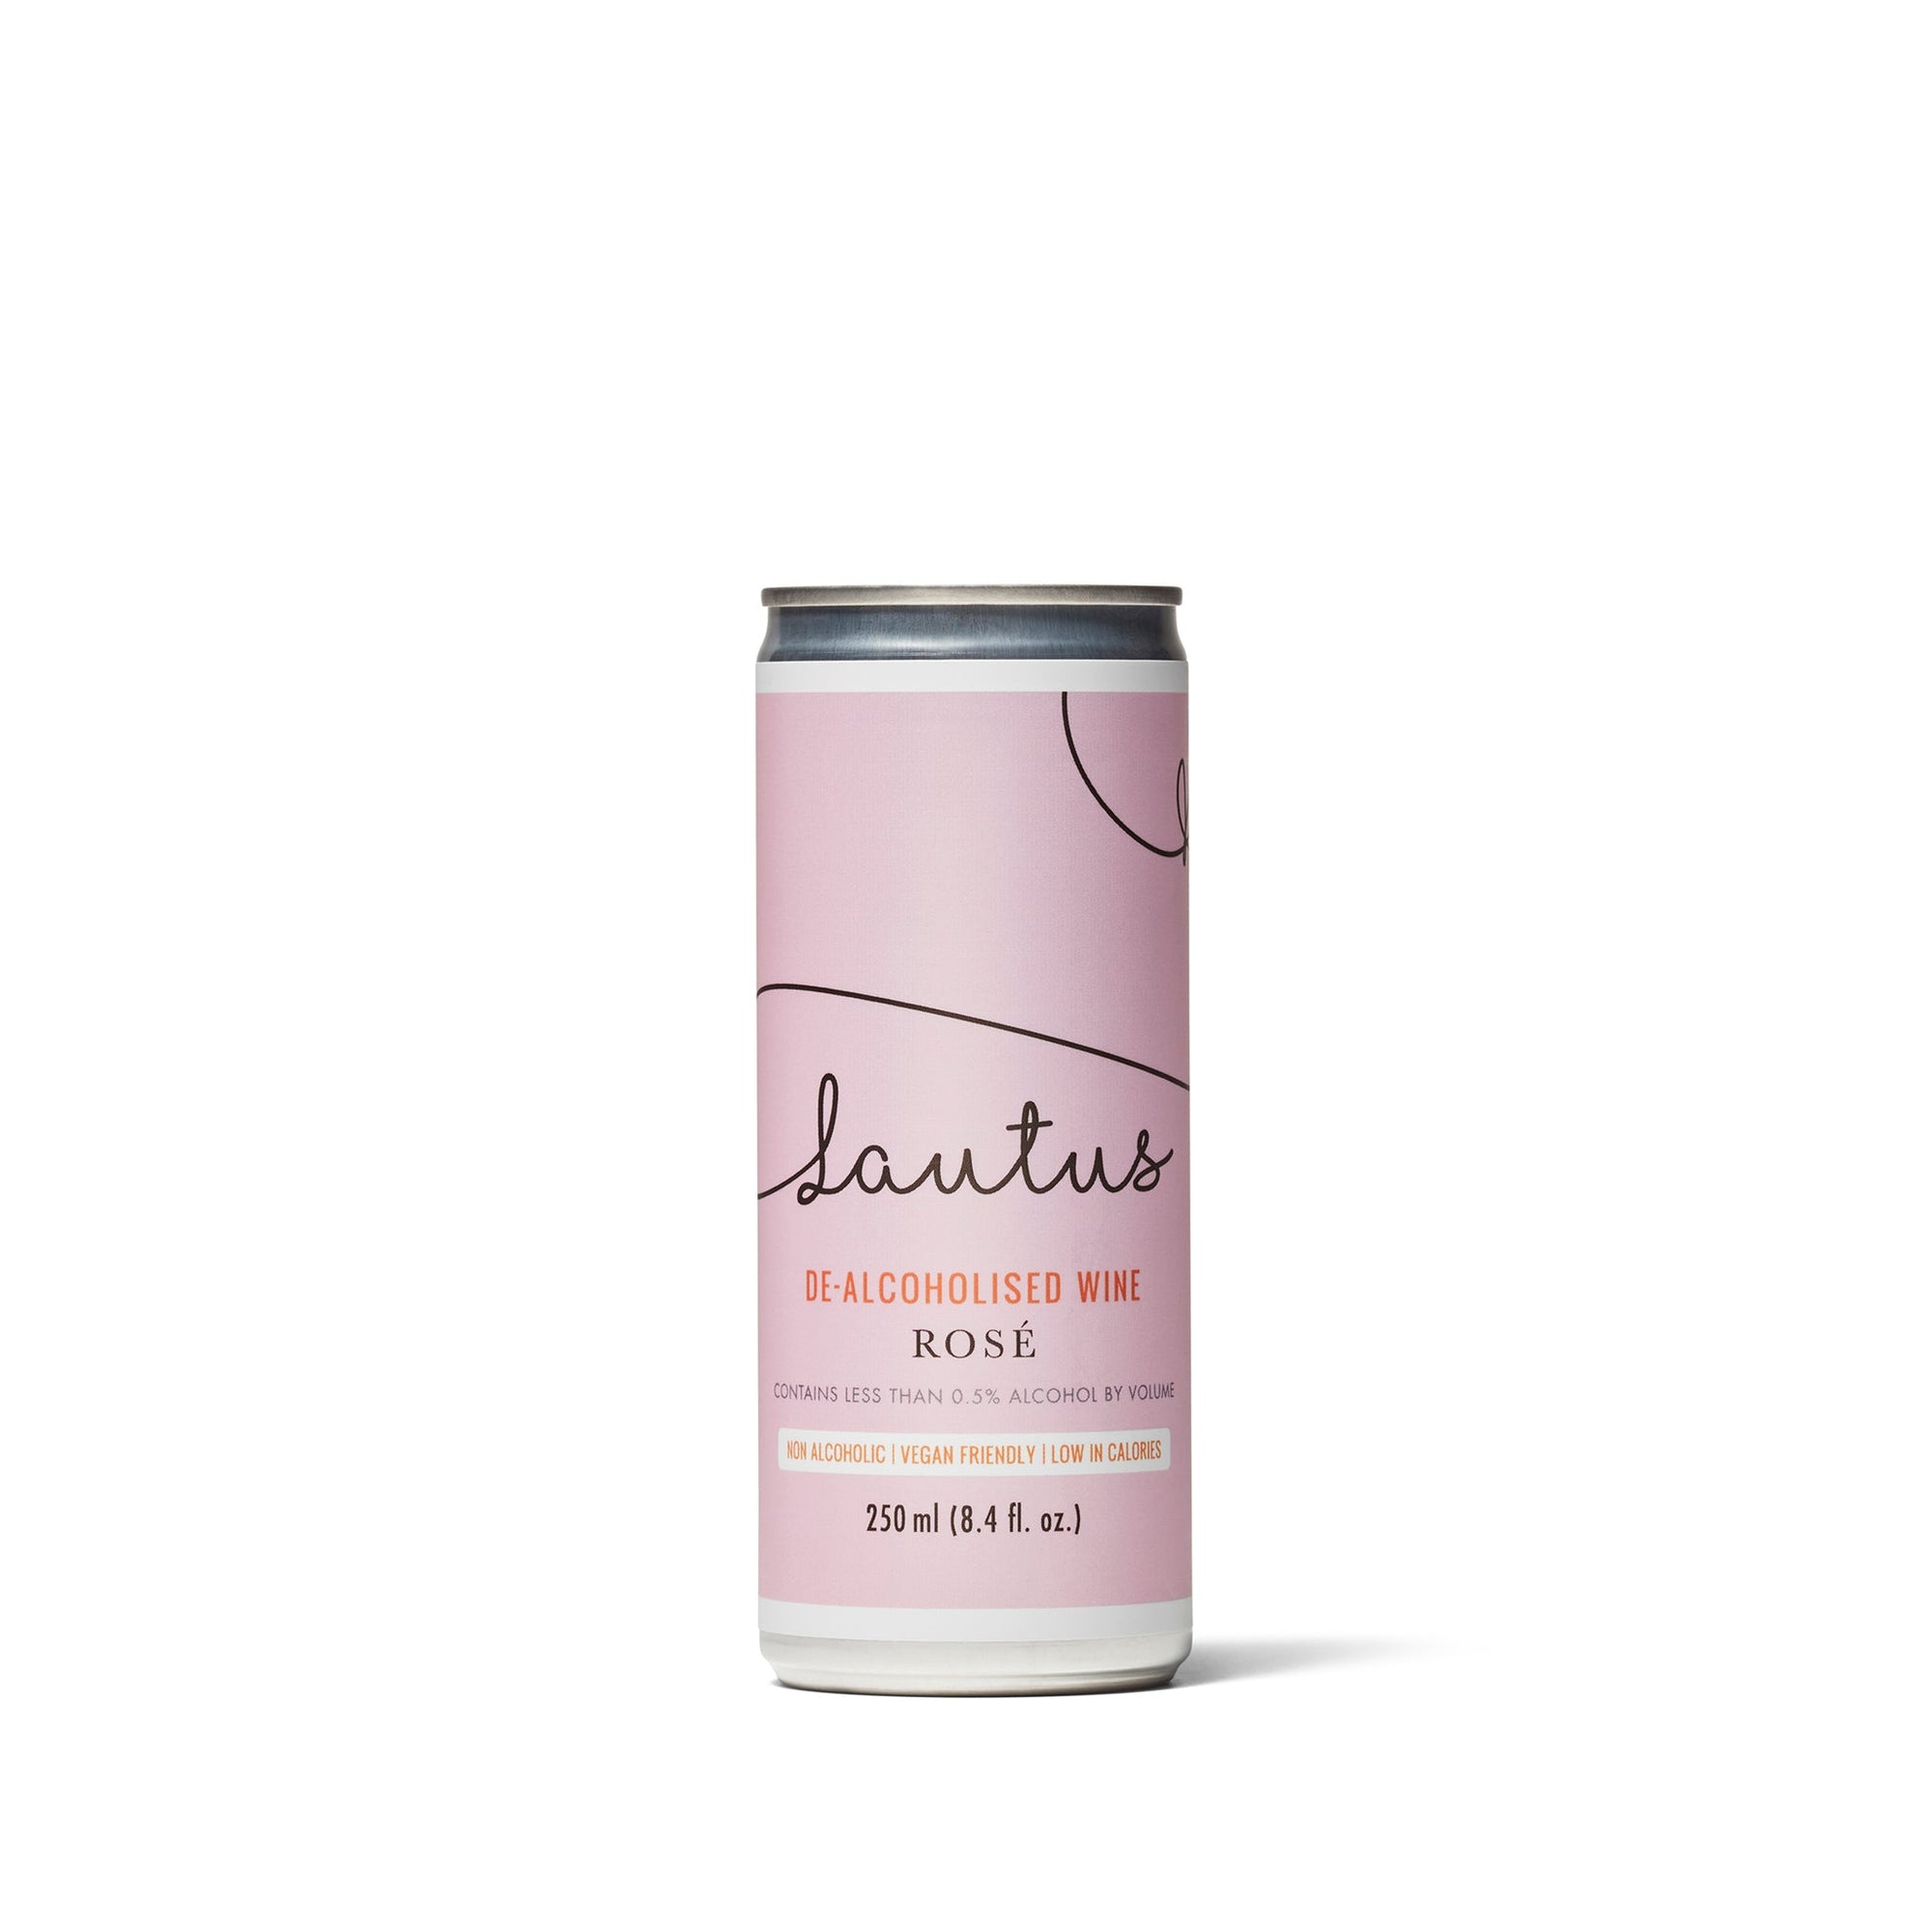 Lautus - Non-Alcoholic Wine - Rosé - 4-Pack - Boisson